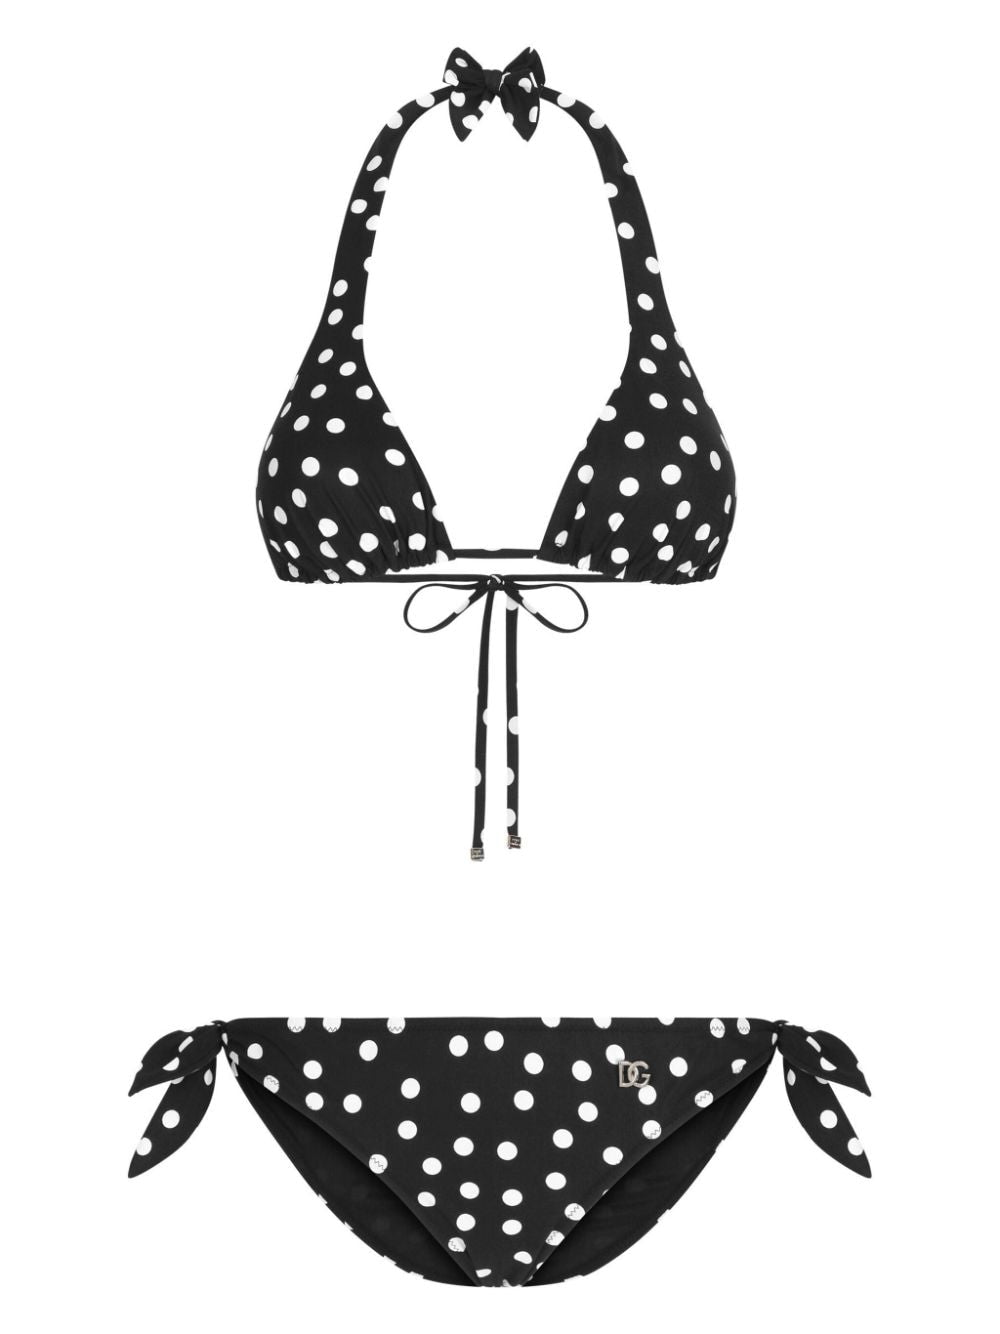 Polka dot-print triangle bikini set<BR/><BR/><BR/>